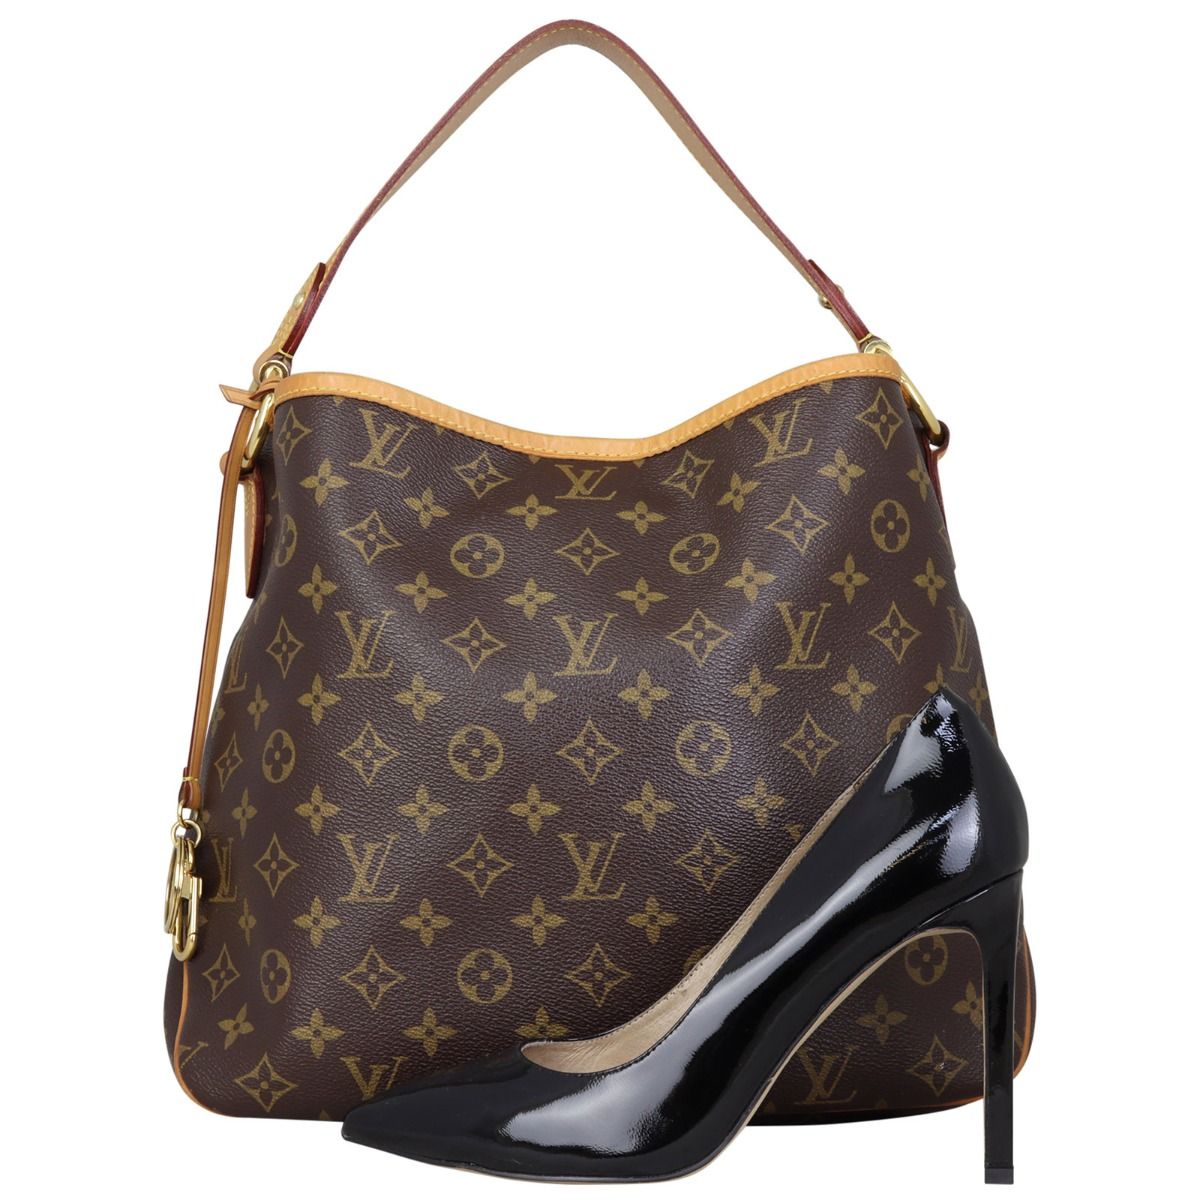 Louis Vuitton Delightful PM Shoulder Bag in Monogram Vachette - SOLD